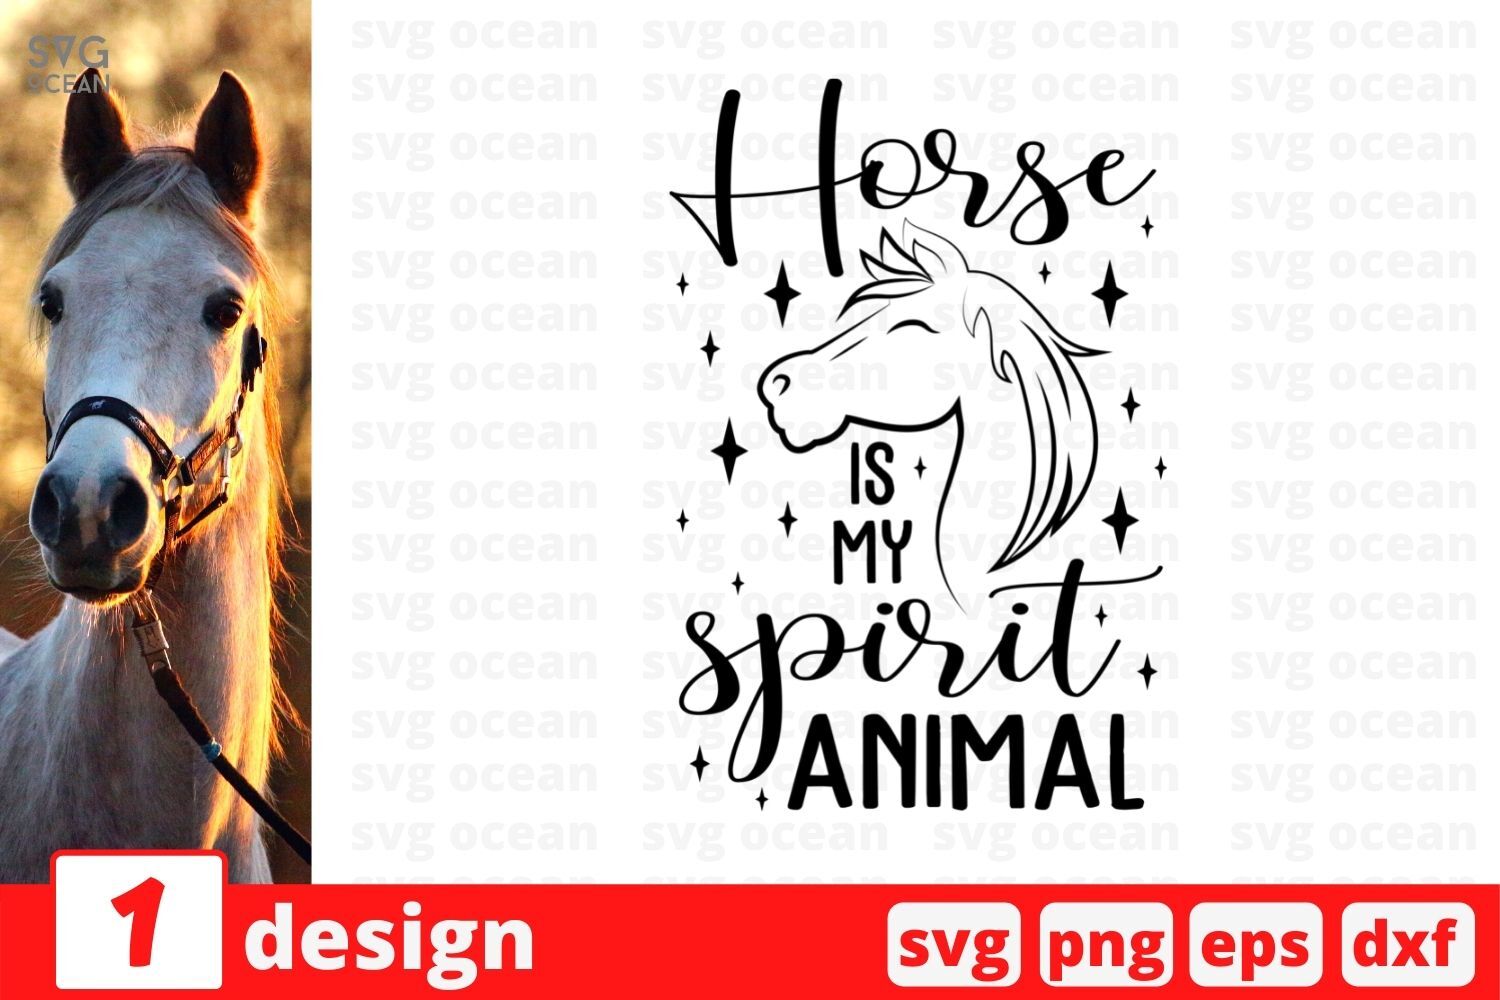 Horse is my spirit animal SVG Cut File By SvgOcean | TheHungryJPEG